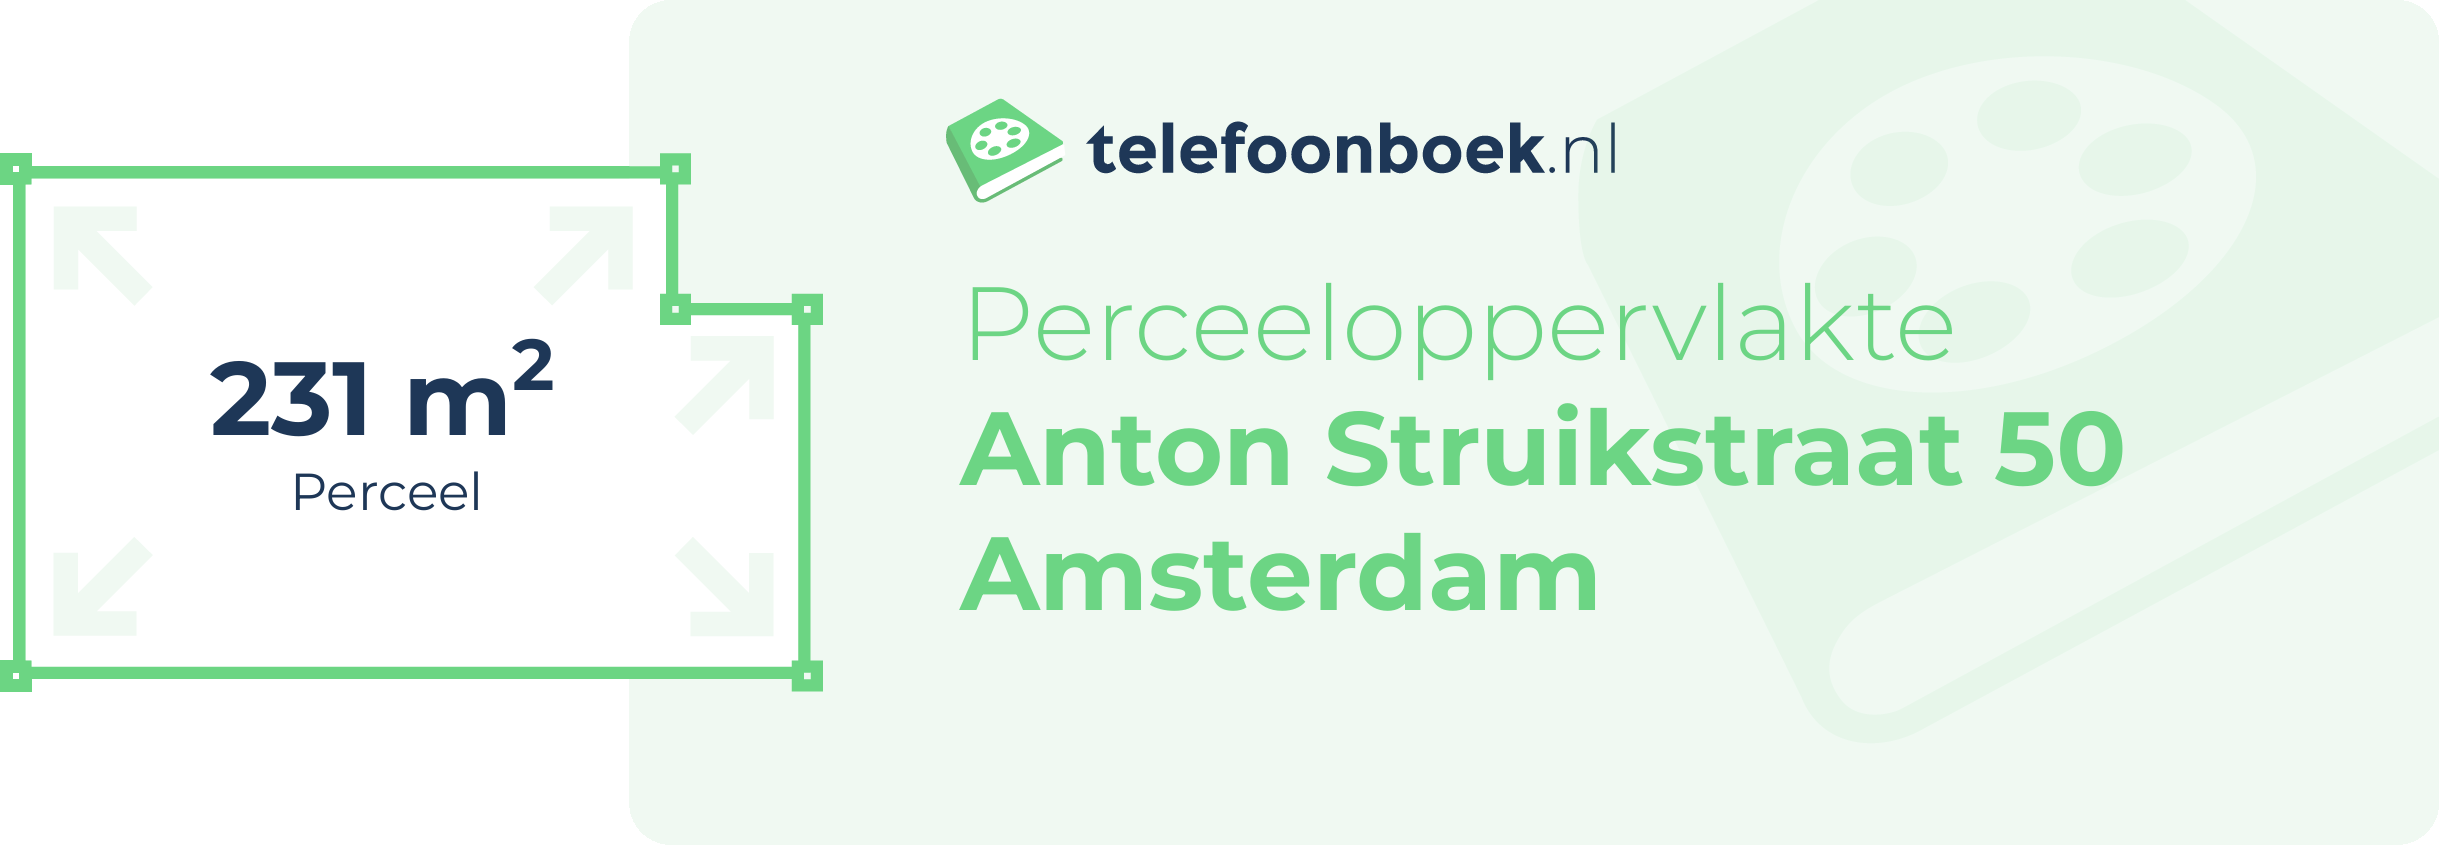 Perceeloppervlakte Anton Struikstraat 50 Amsterdam